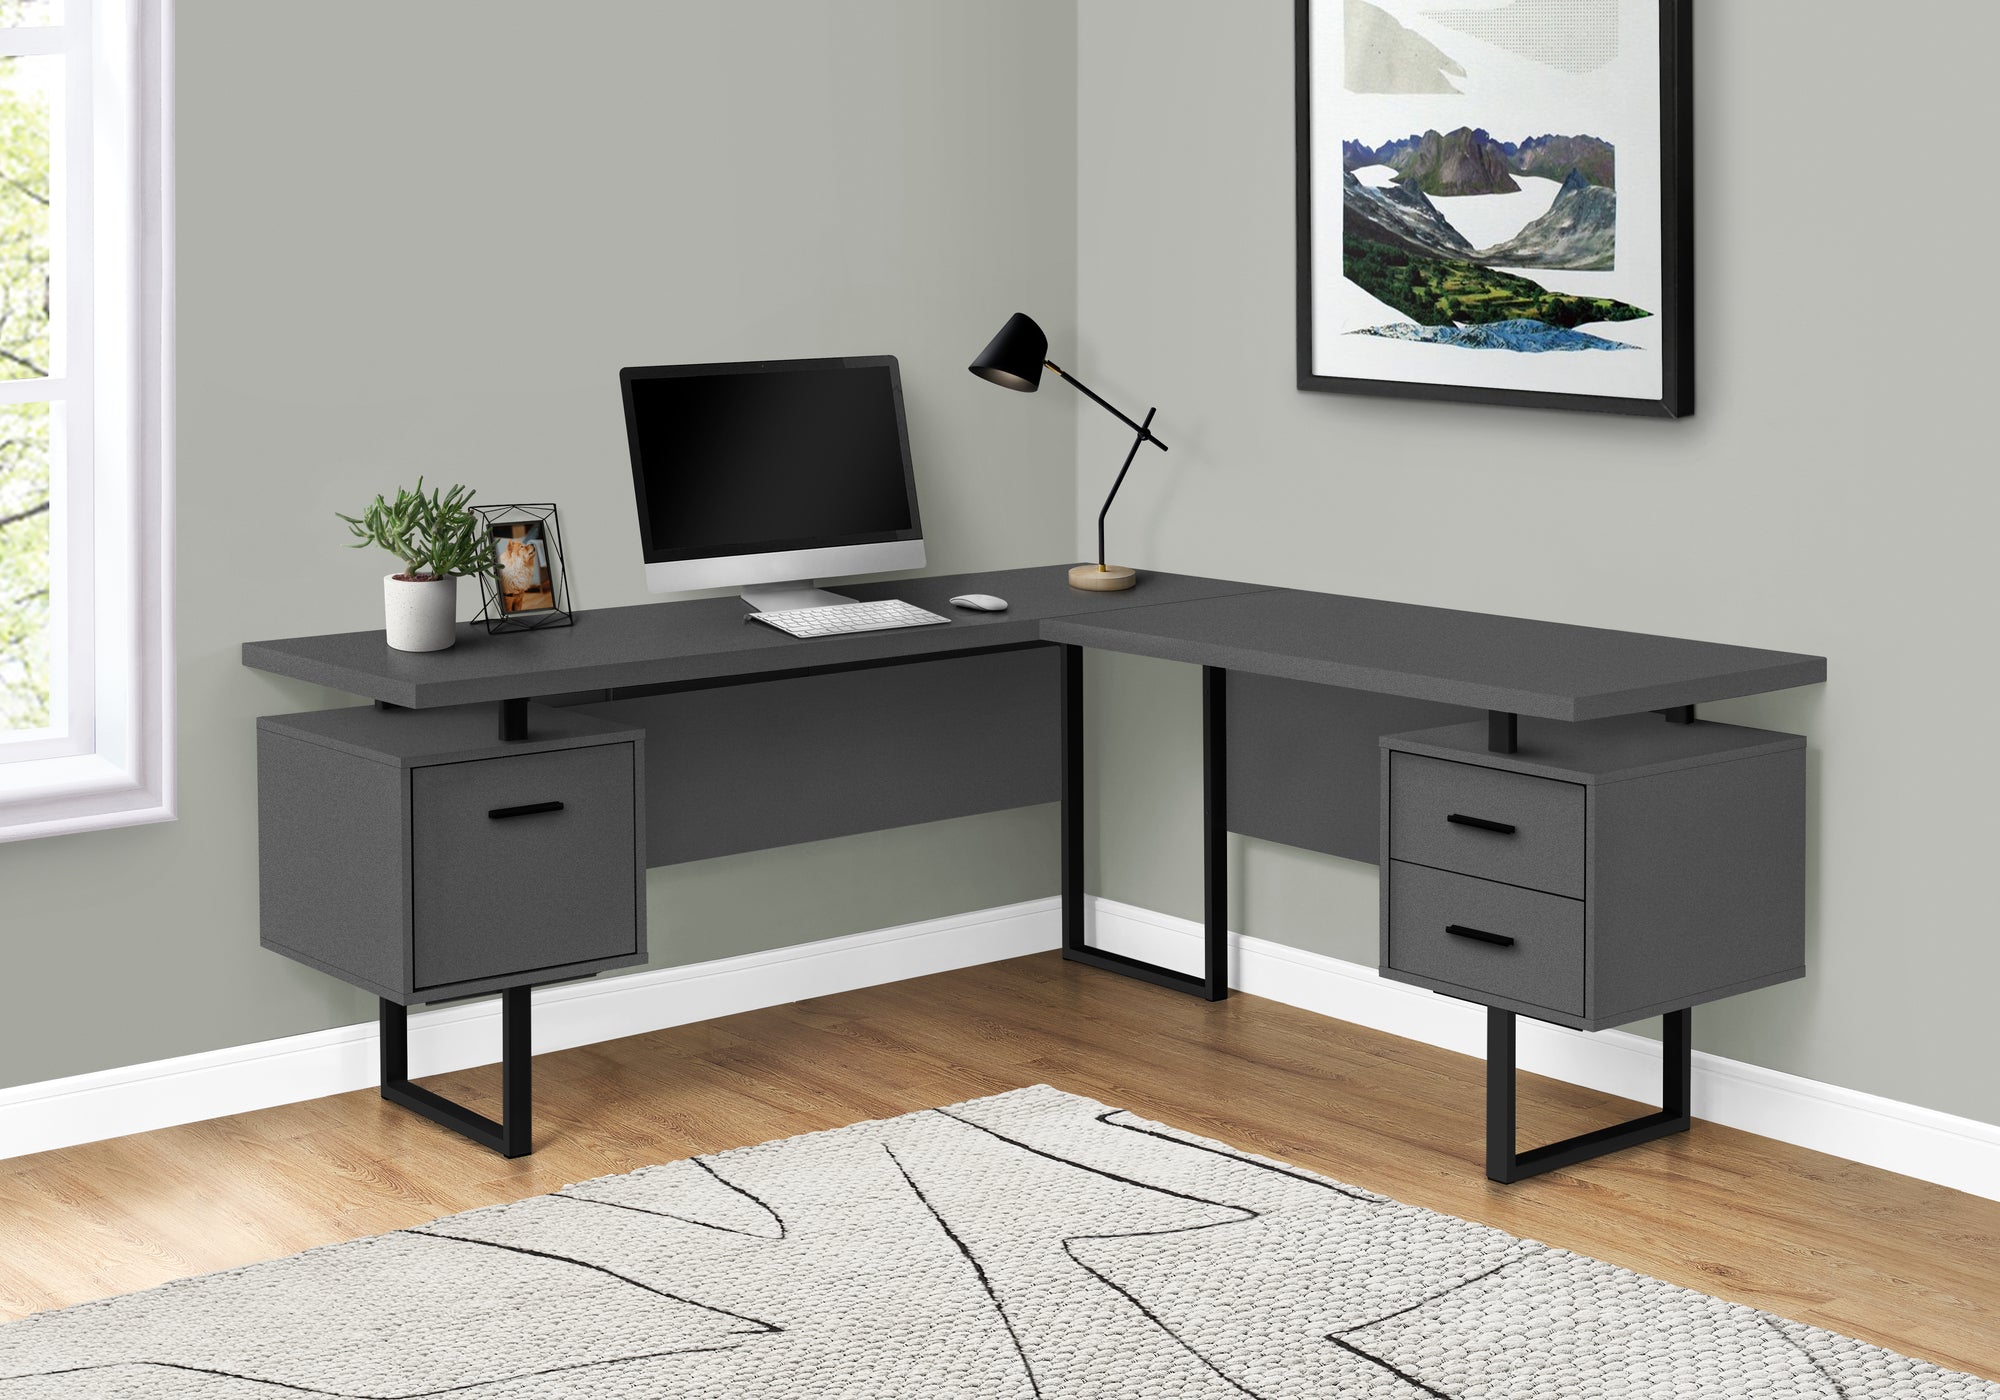 MN-317615    Computer Desk, Home Office, Corner, Left, Right Set-Up, Storage Drawers, 70"L, L Shape, Metal, Laminate, Grey, Contemporary, Modern